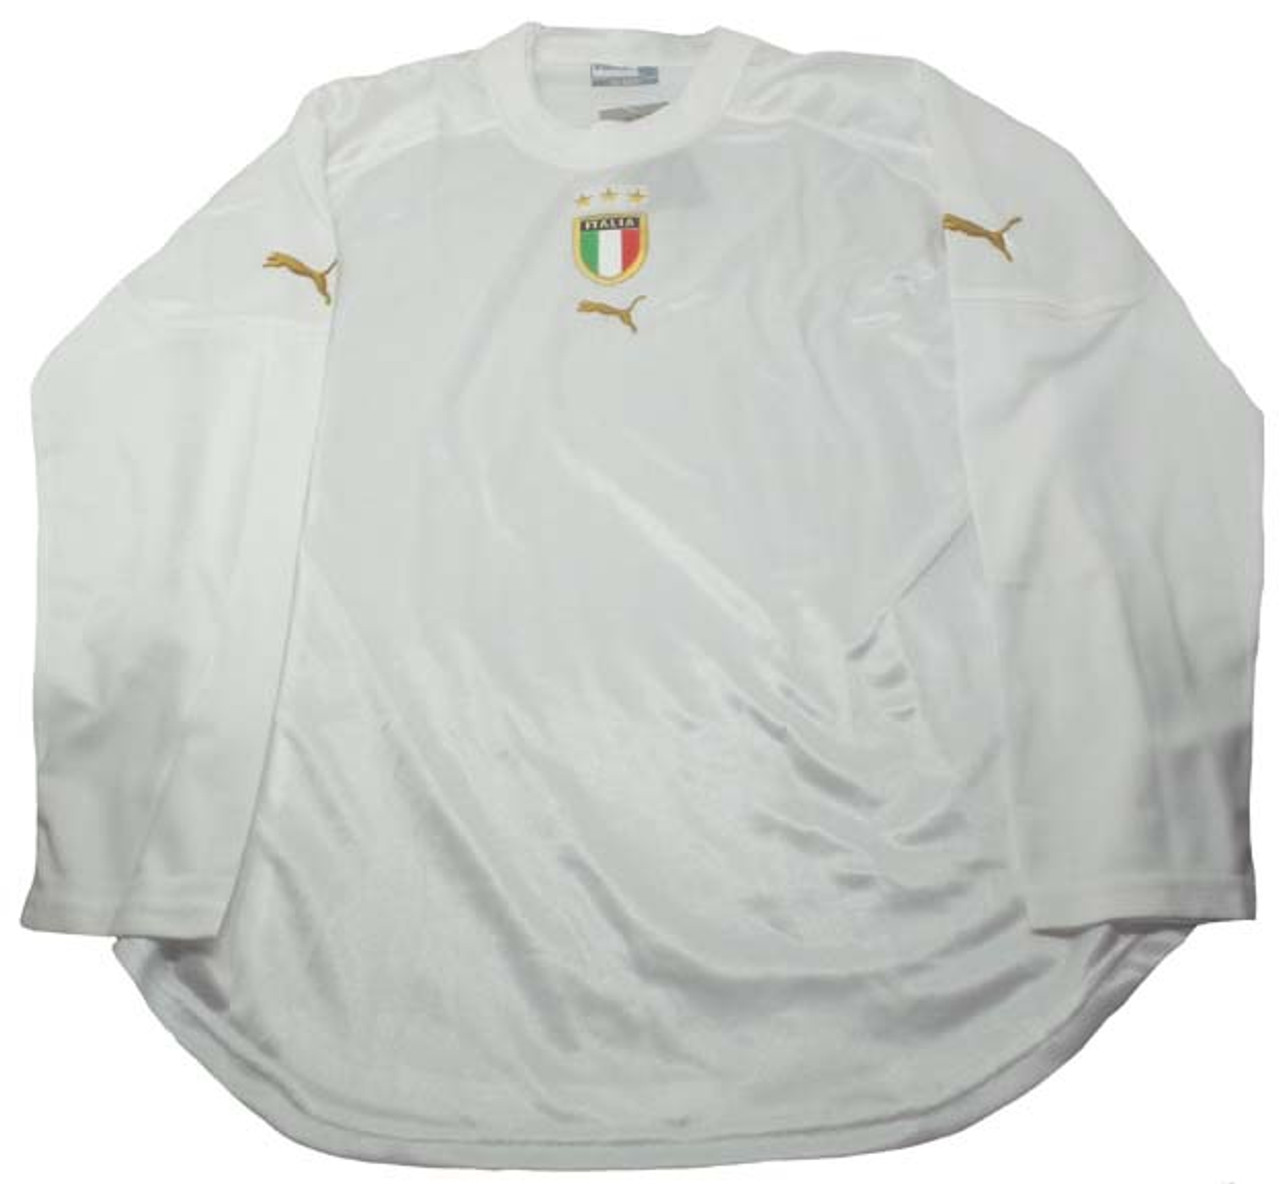 PUMA ITALY 2004 AWAY L/S JERSEY - Soccer Plus